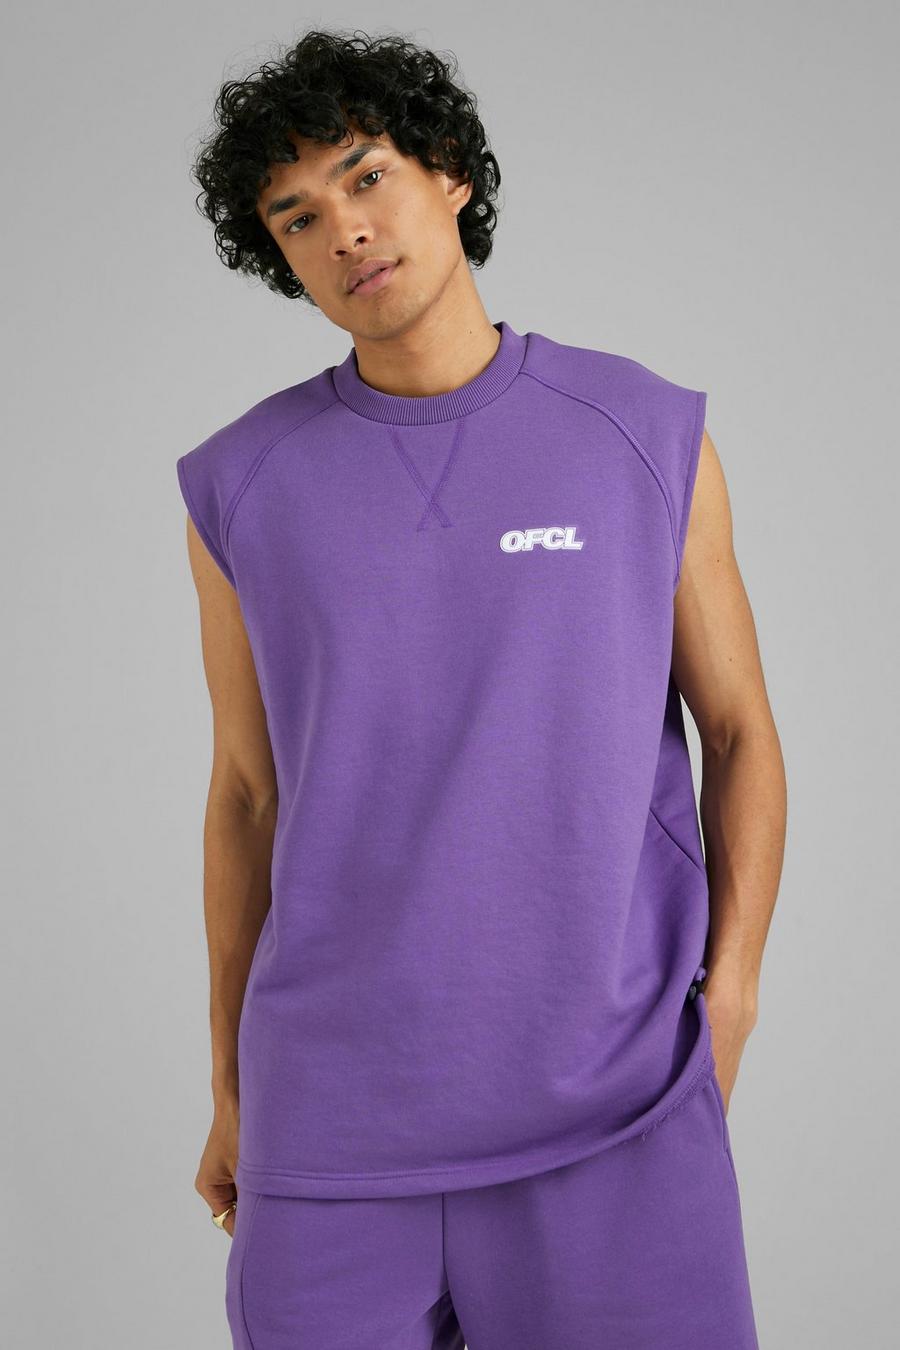 Purple Oversized Ofcl Sleeveless Sweatshirt